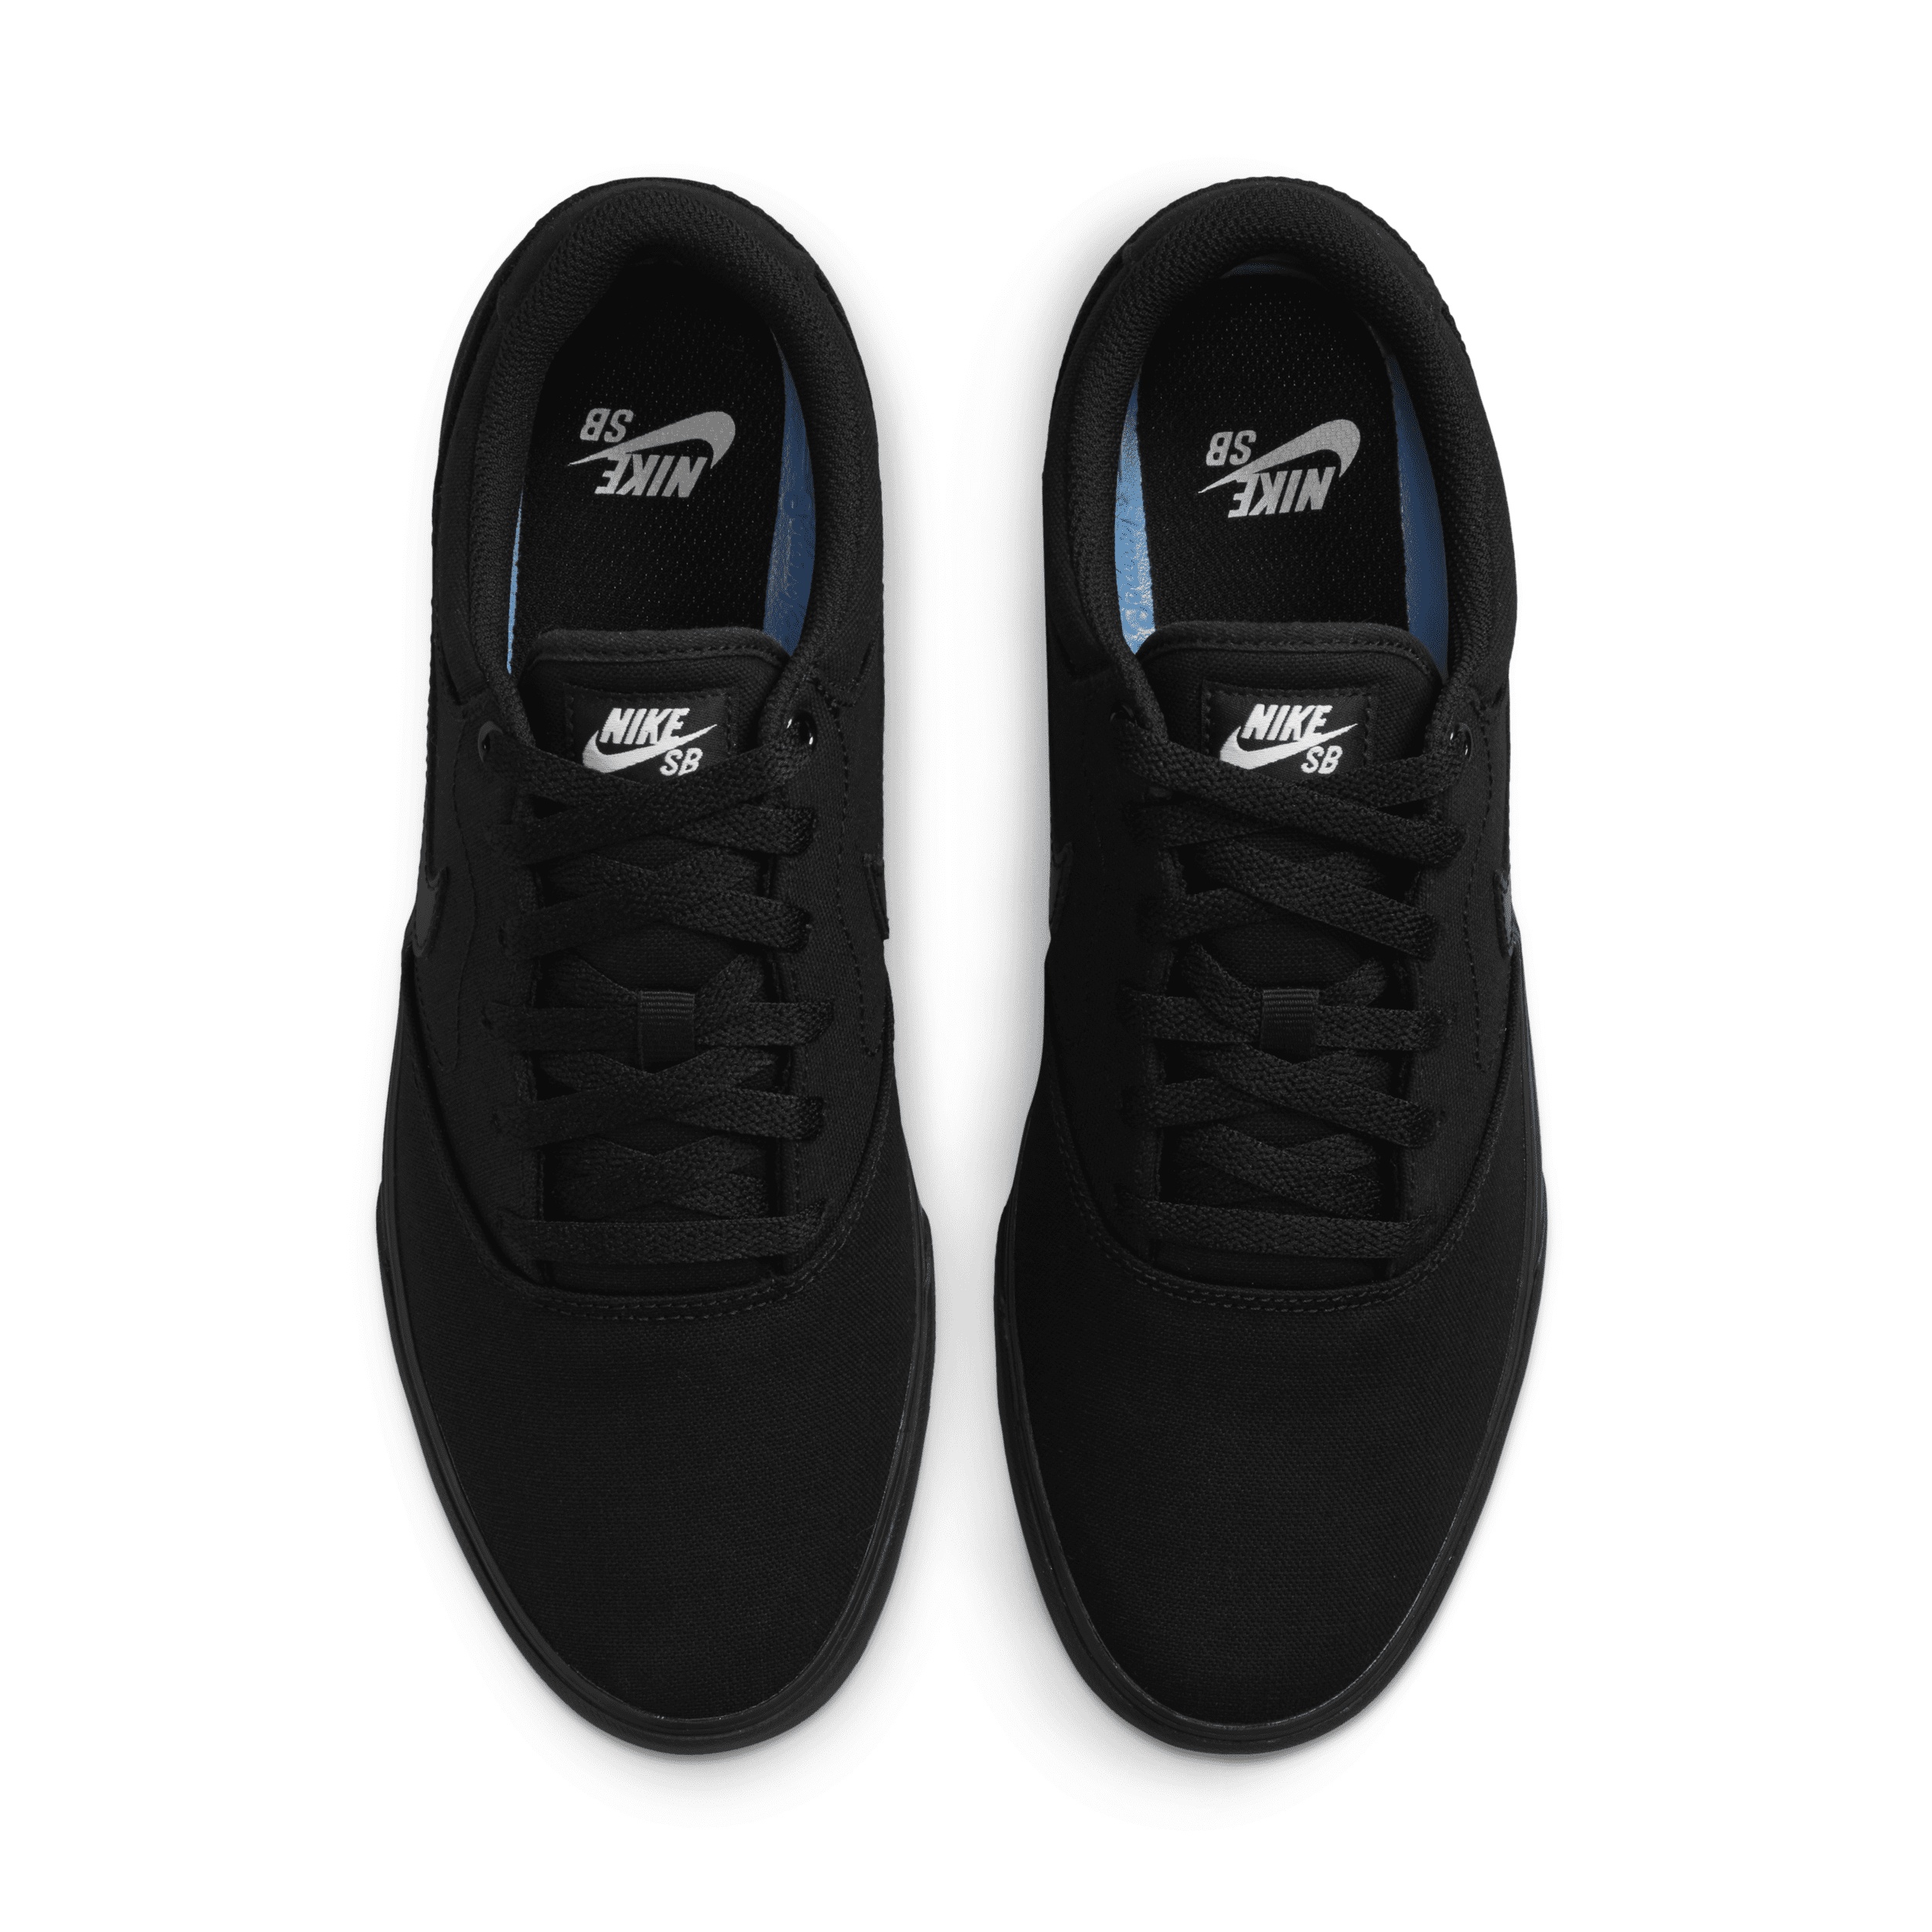 Unisex Nike SB Chron 2 Canvas Skate Shoes - 4